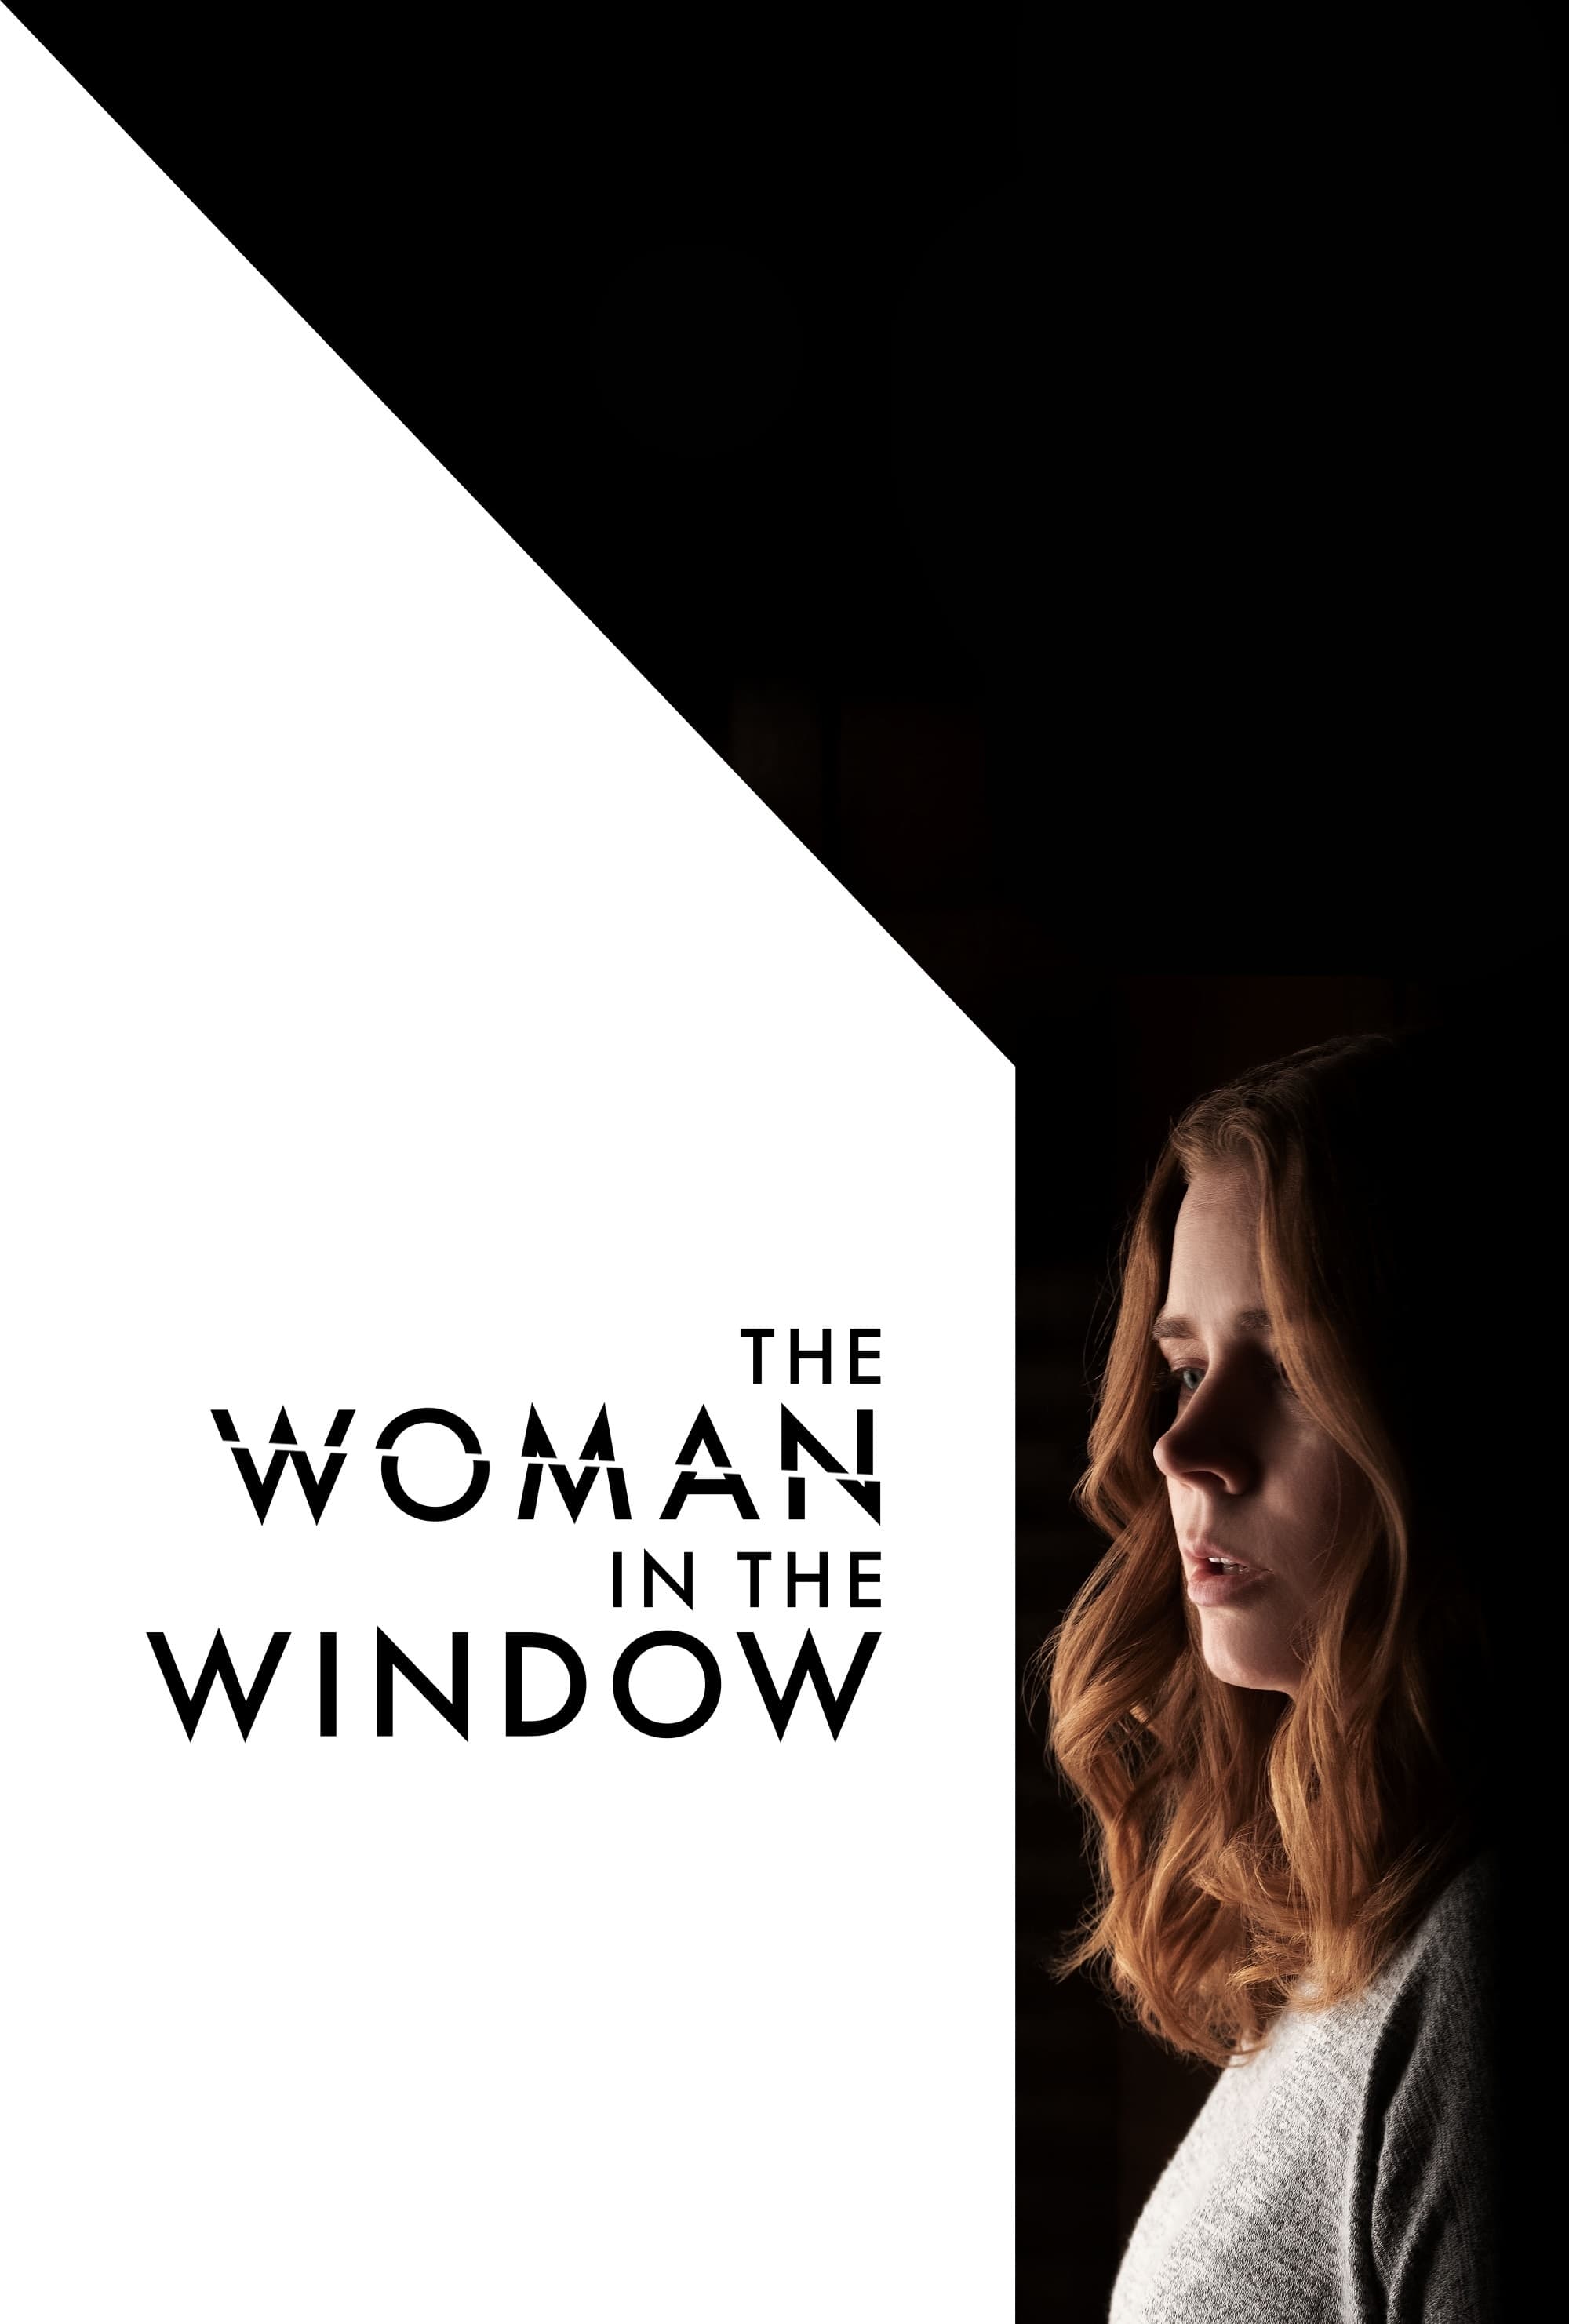 [MINI Super-HQ] The Woman in the Window (2021) ส่องปมมรณะ [1080p] [NETFLIX] [พากย์ไทย 5.1 + เสียงอังกฤษ 5.1] [บรรยายไทย + อังกฤษ] [เสียงไทย + ซับไทย] [DOSYAUPLOAD]